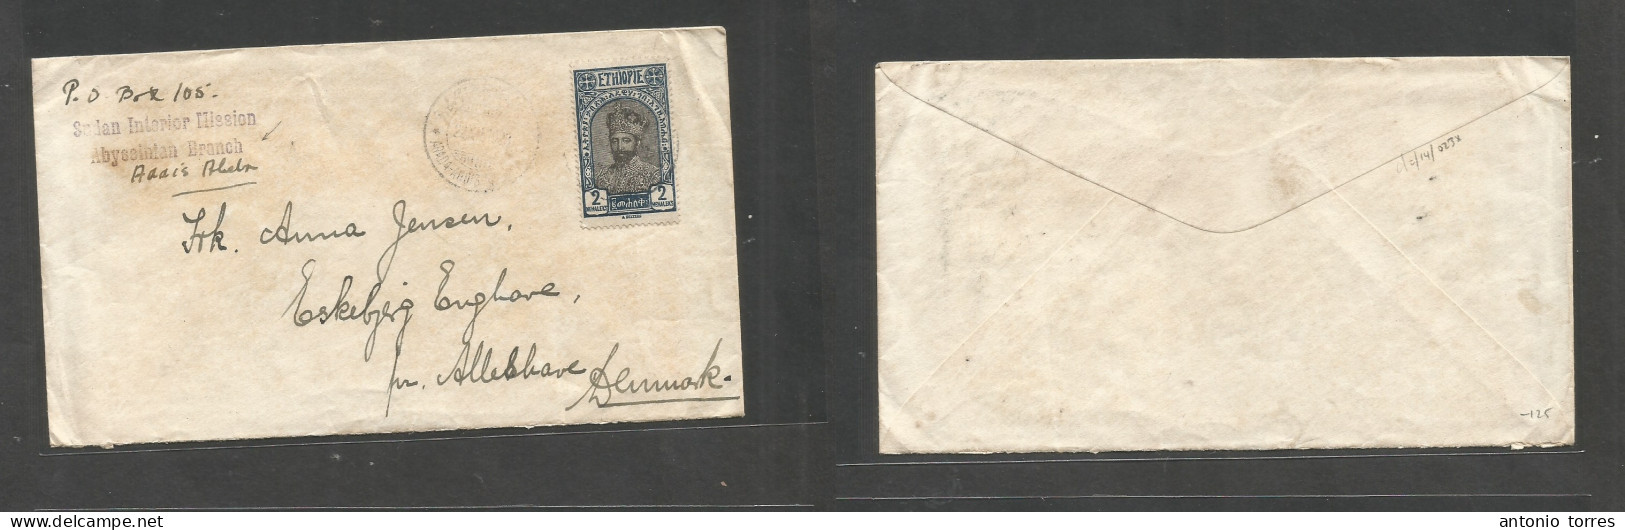 Ethiopia. 1928 (22 Dec) Sudan Mission. Abissinian Branch. Abada, Addis Abeba - Denmark, Eskebjeg. 2m Single Fkd Envelope - Äthiopien